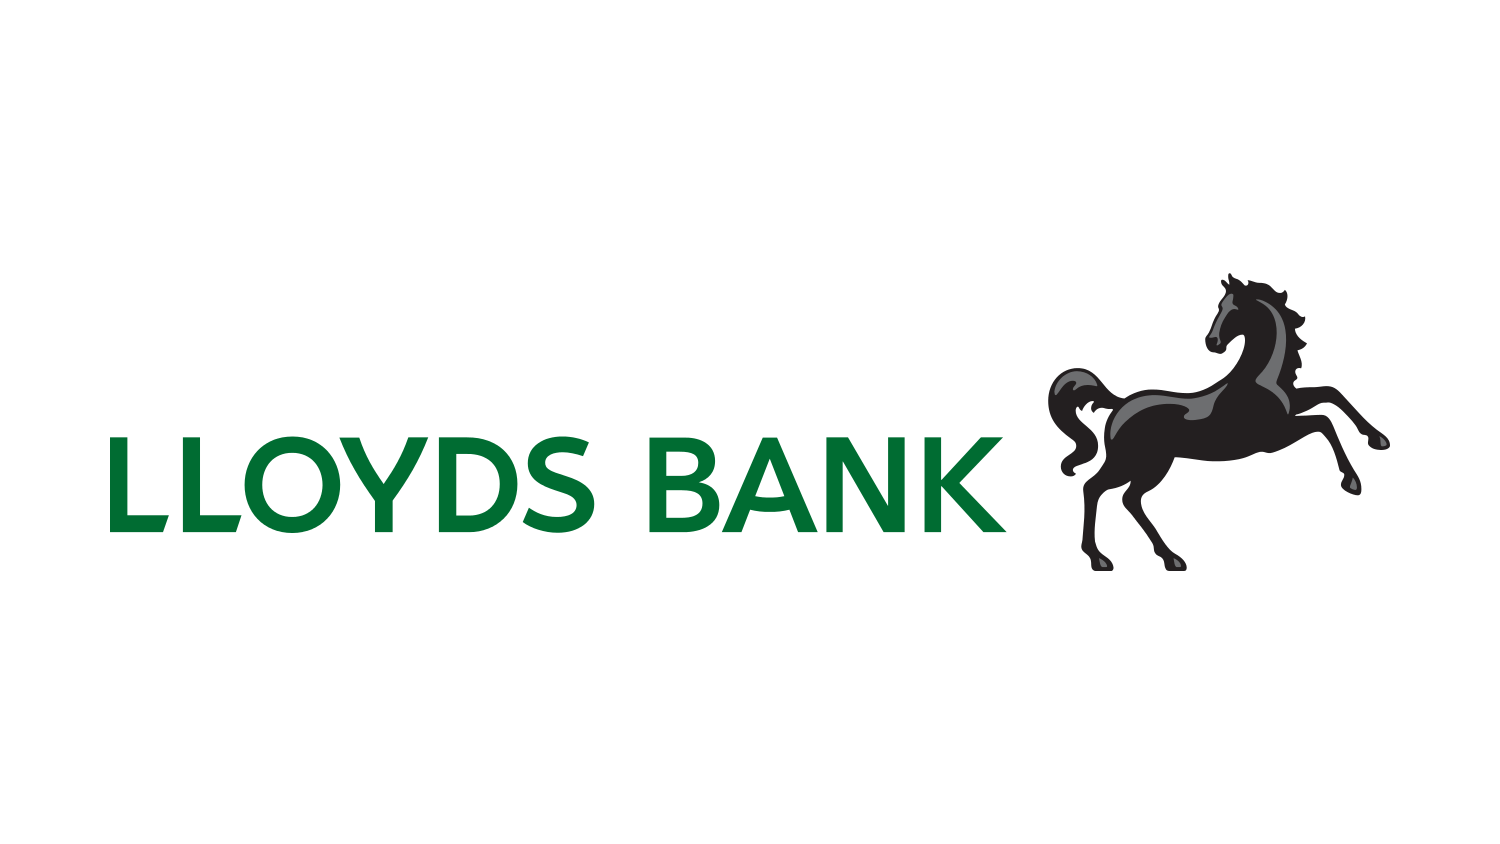 Lloyds Bank branding by Rufus